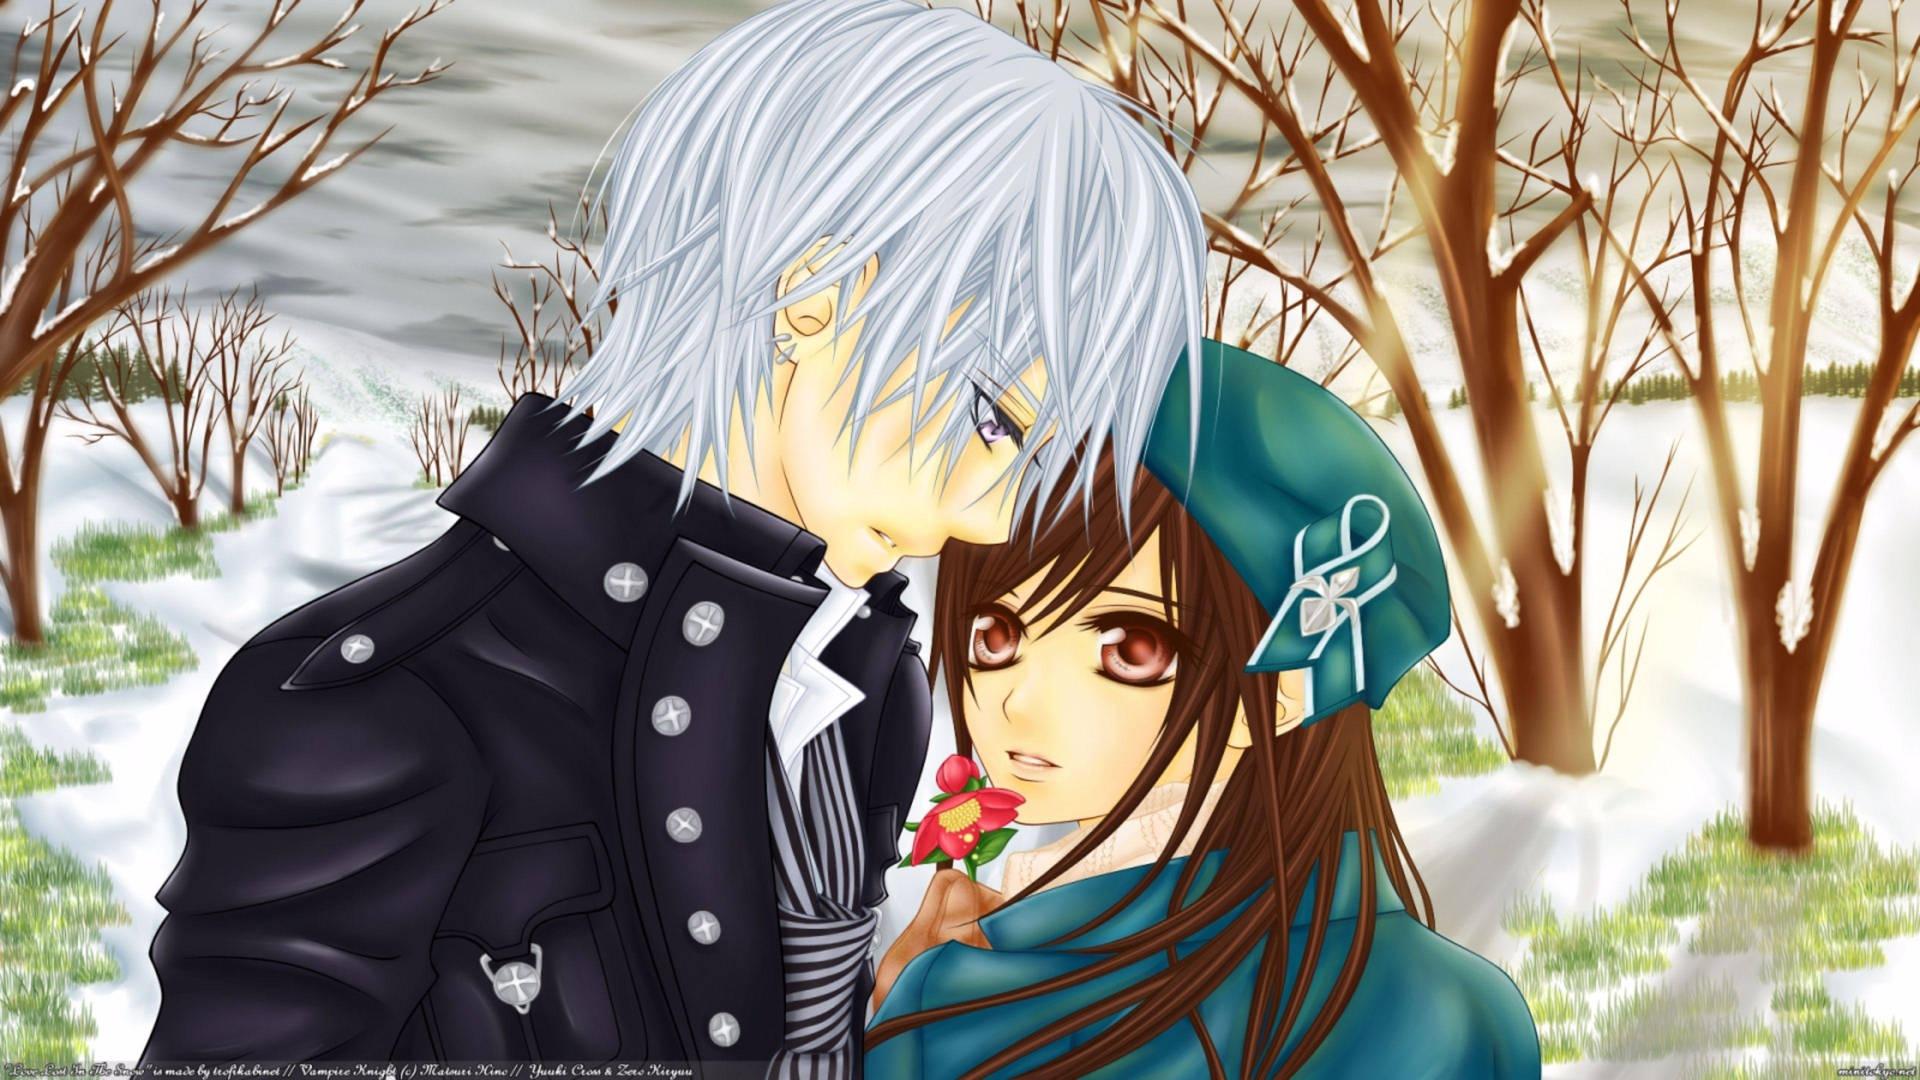 Romantic Anime Couple During Fall Season